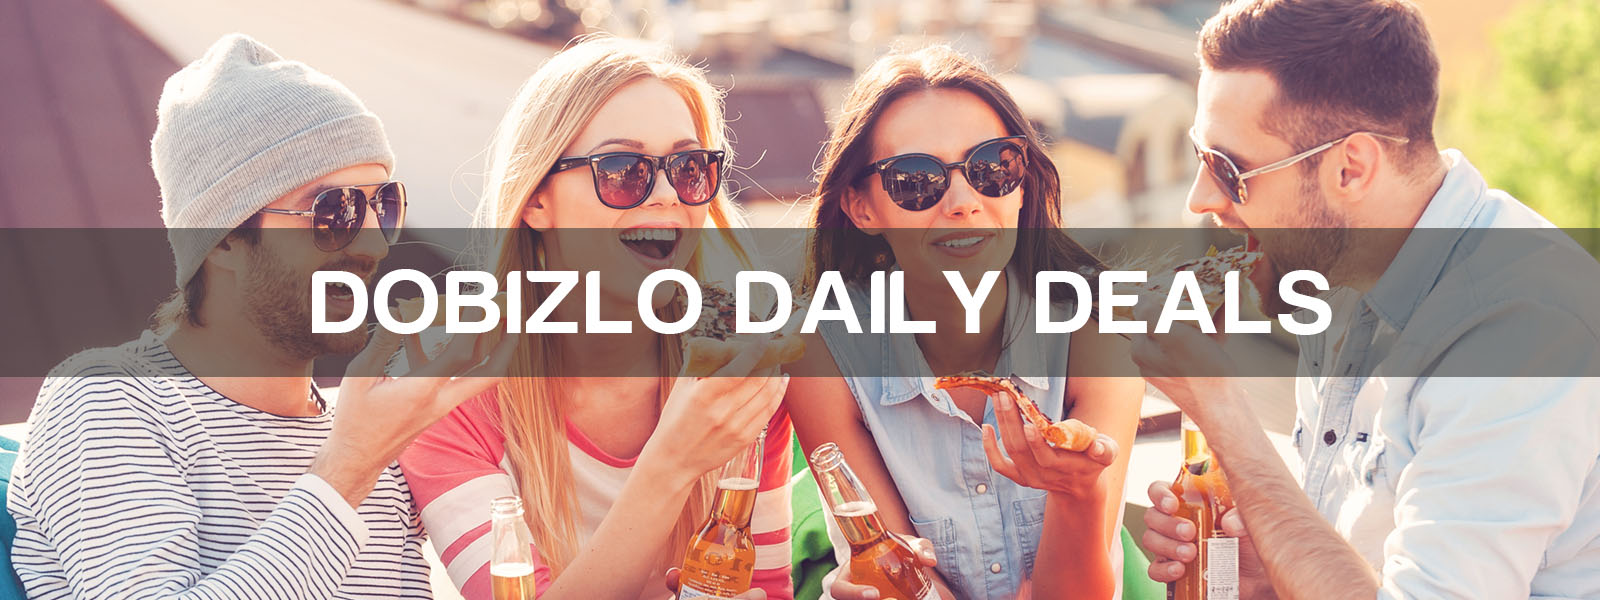 dobizlo daily deals on the website NUMERO NEW